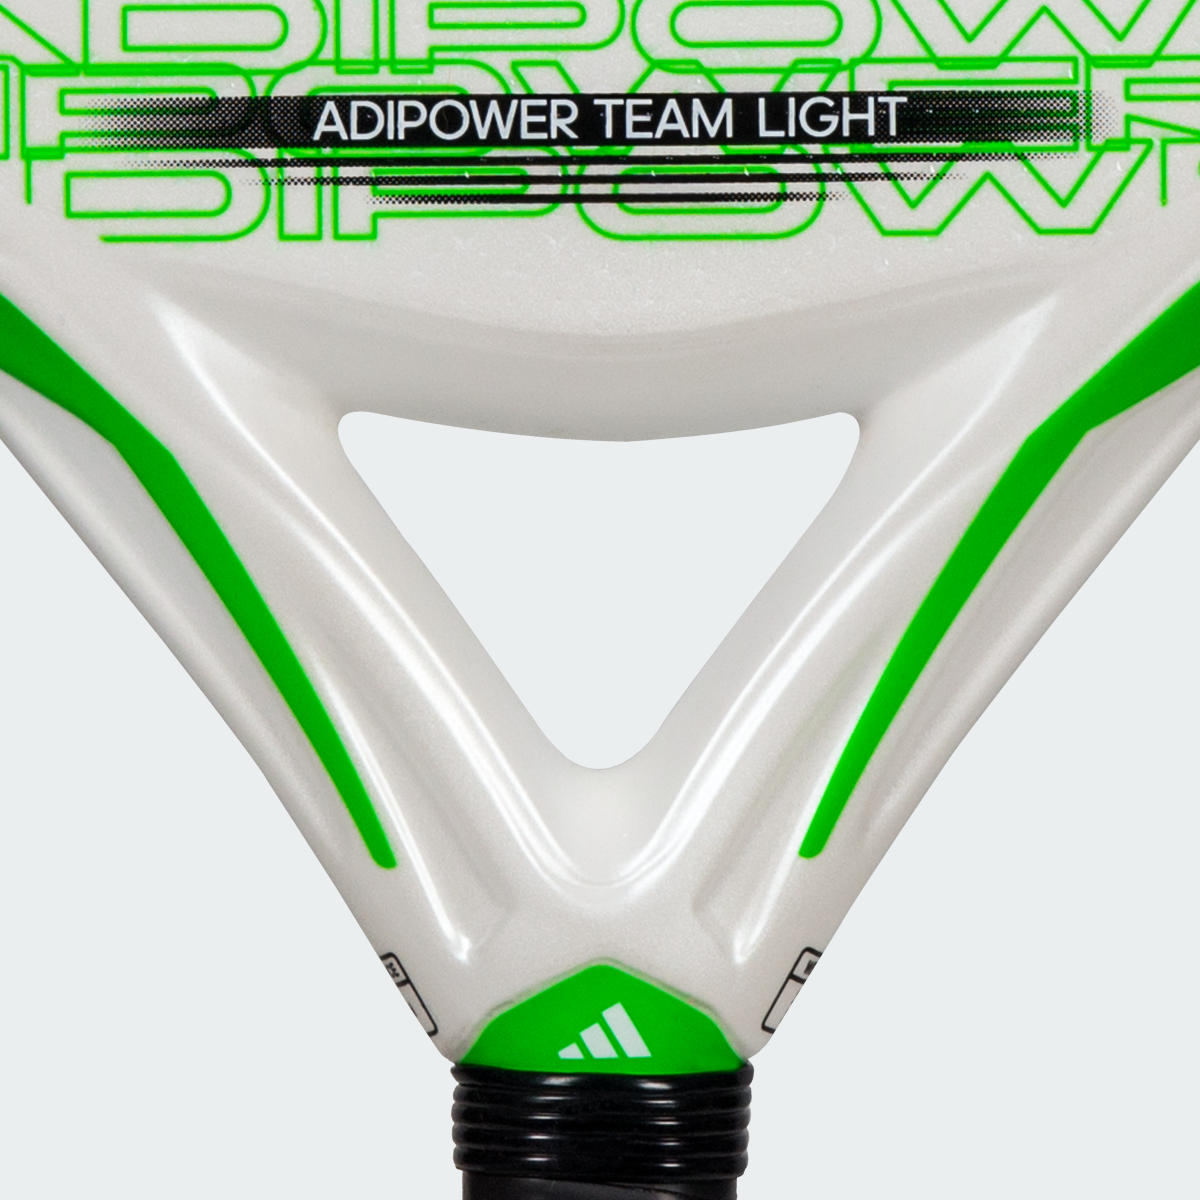 Adidas Adipower Team Light 3.3 Padel Racket. 5